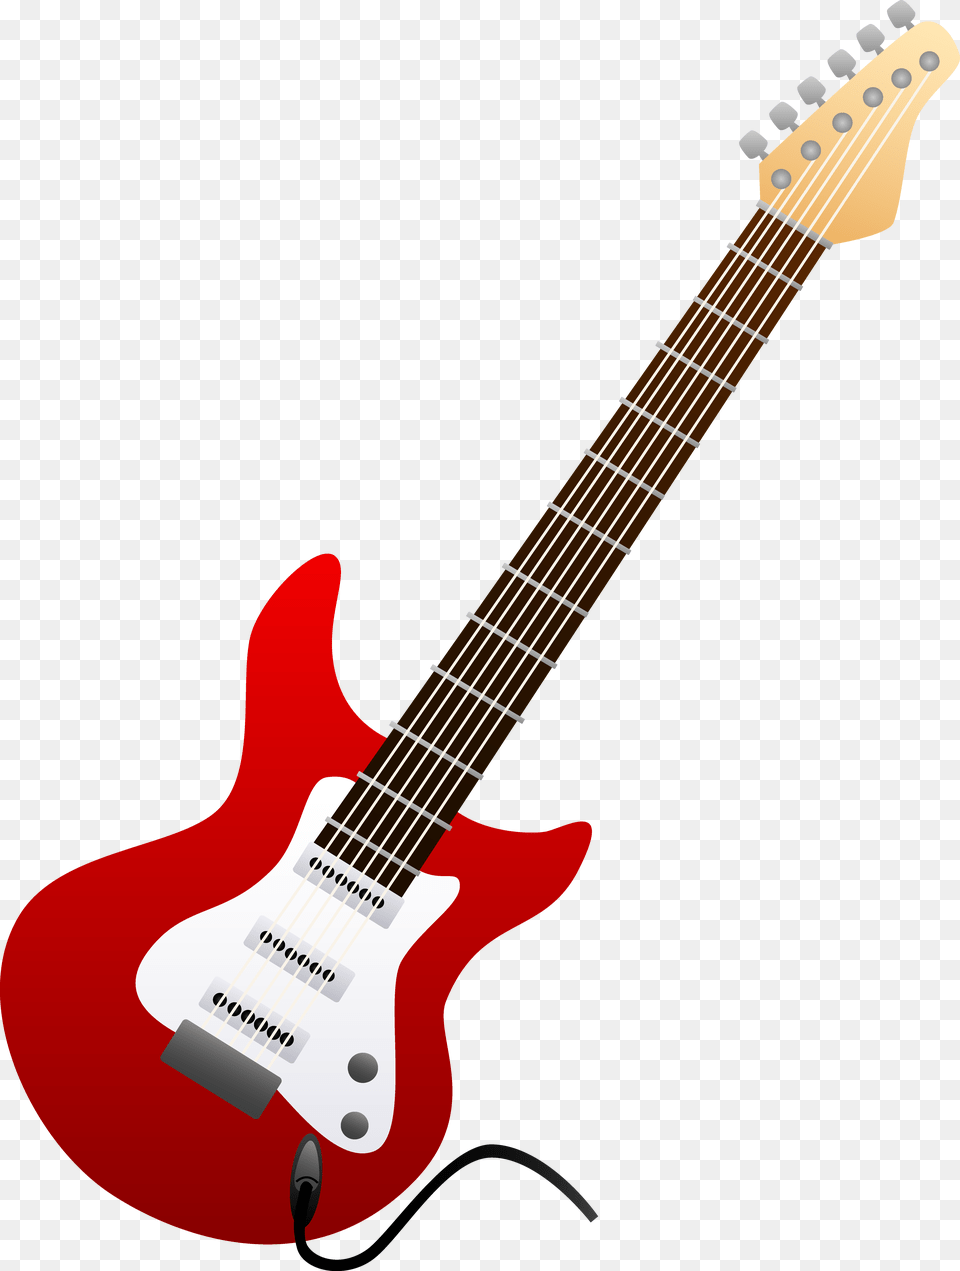 Guitar Clip Art Kaleb Guitar Guitar Design, Electric Guitar, Musical Instrument, Bass Guitar Png Image